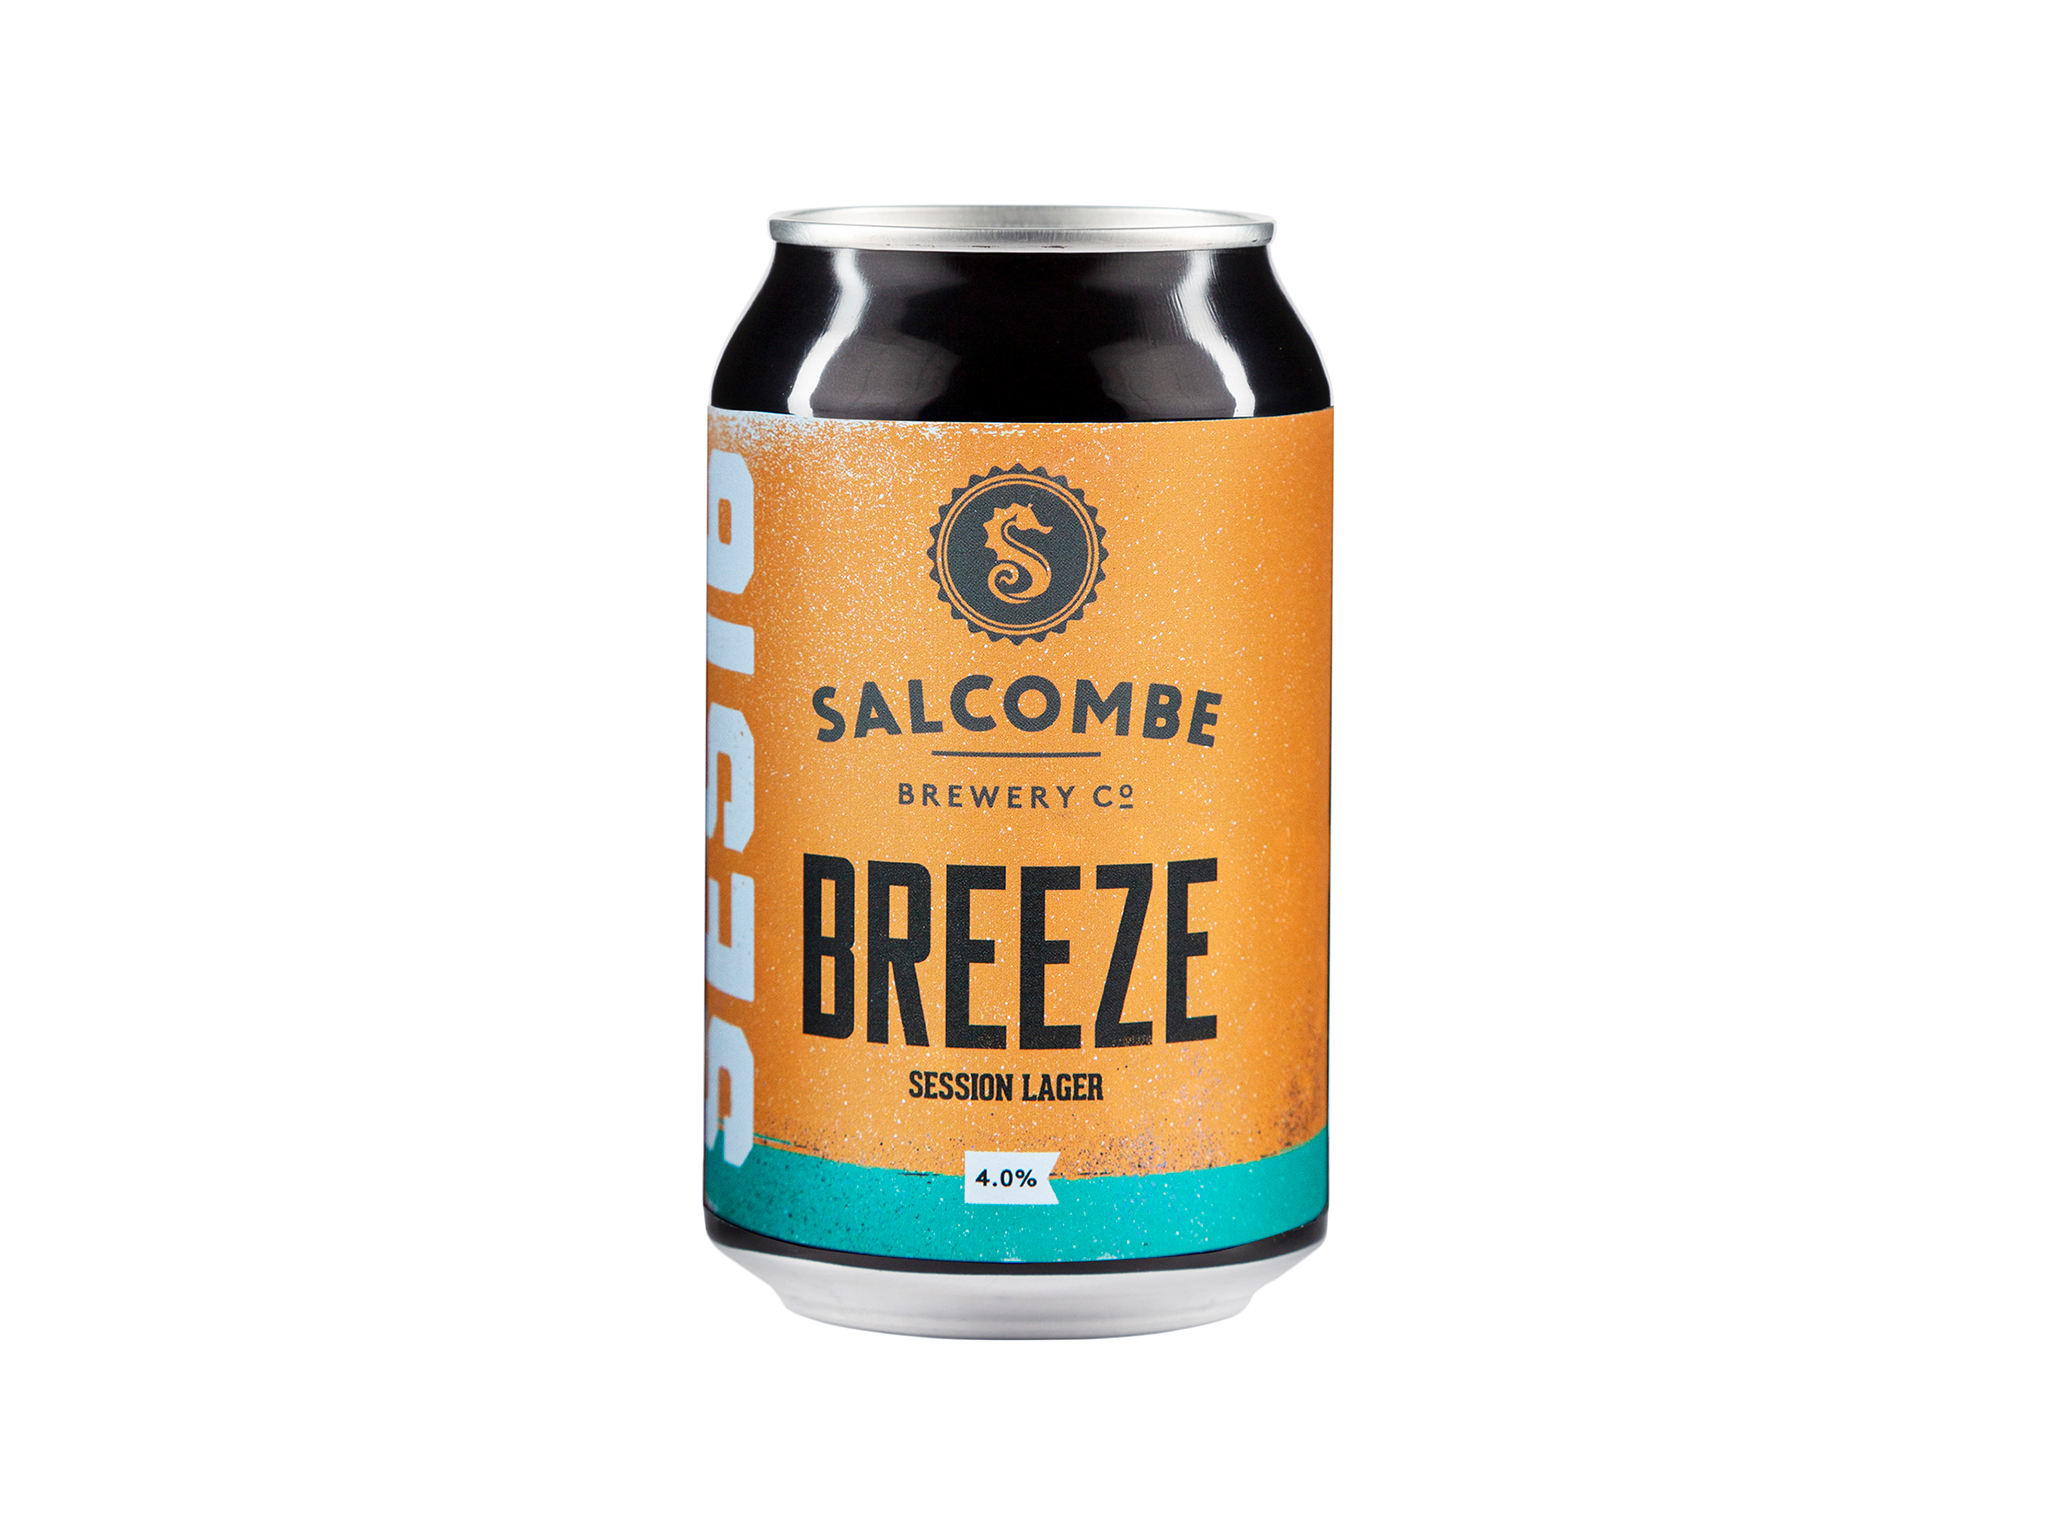 Salcombe brewery co breeze